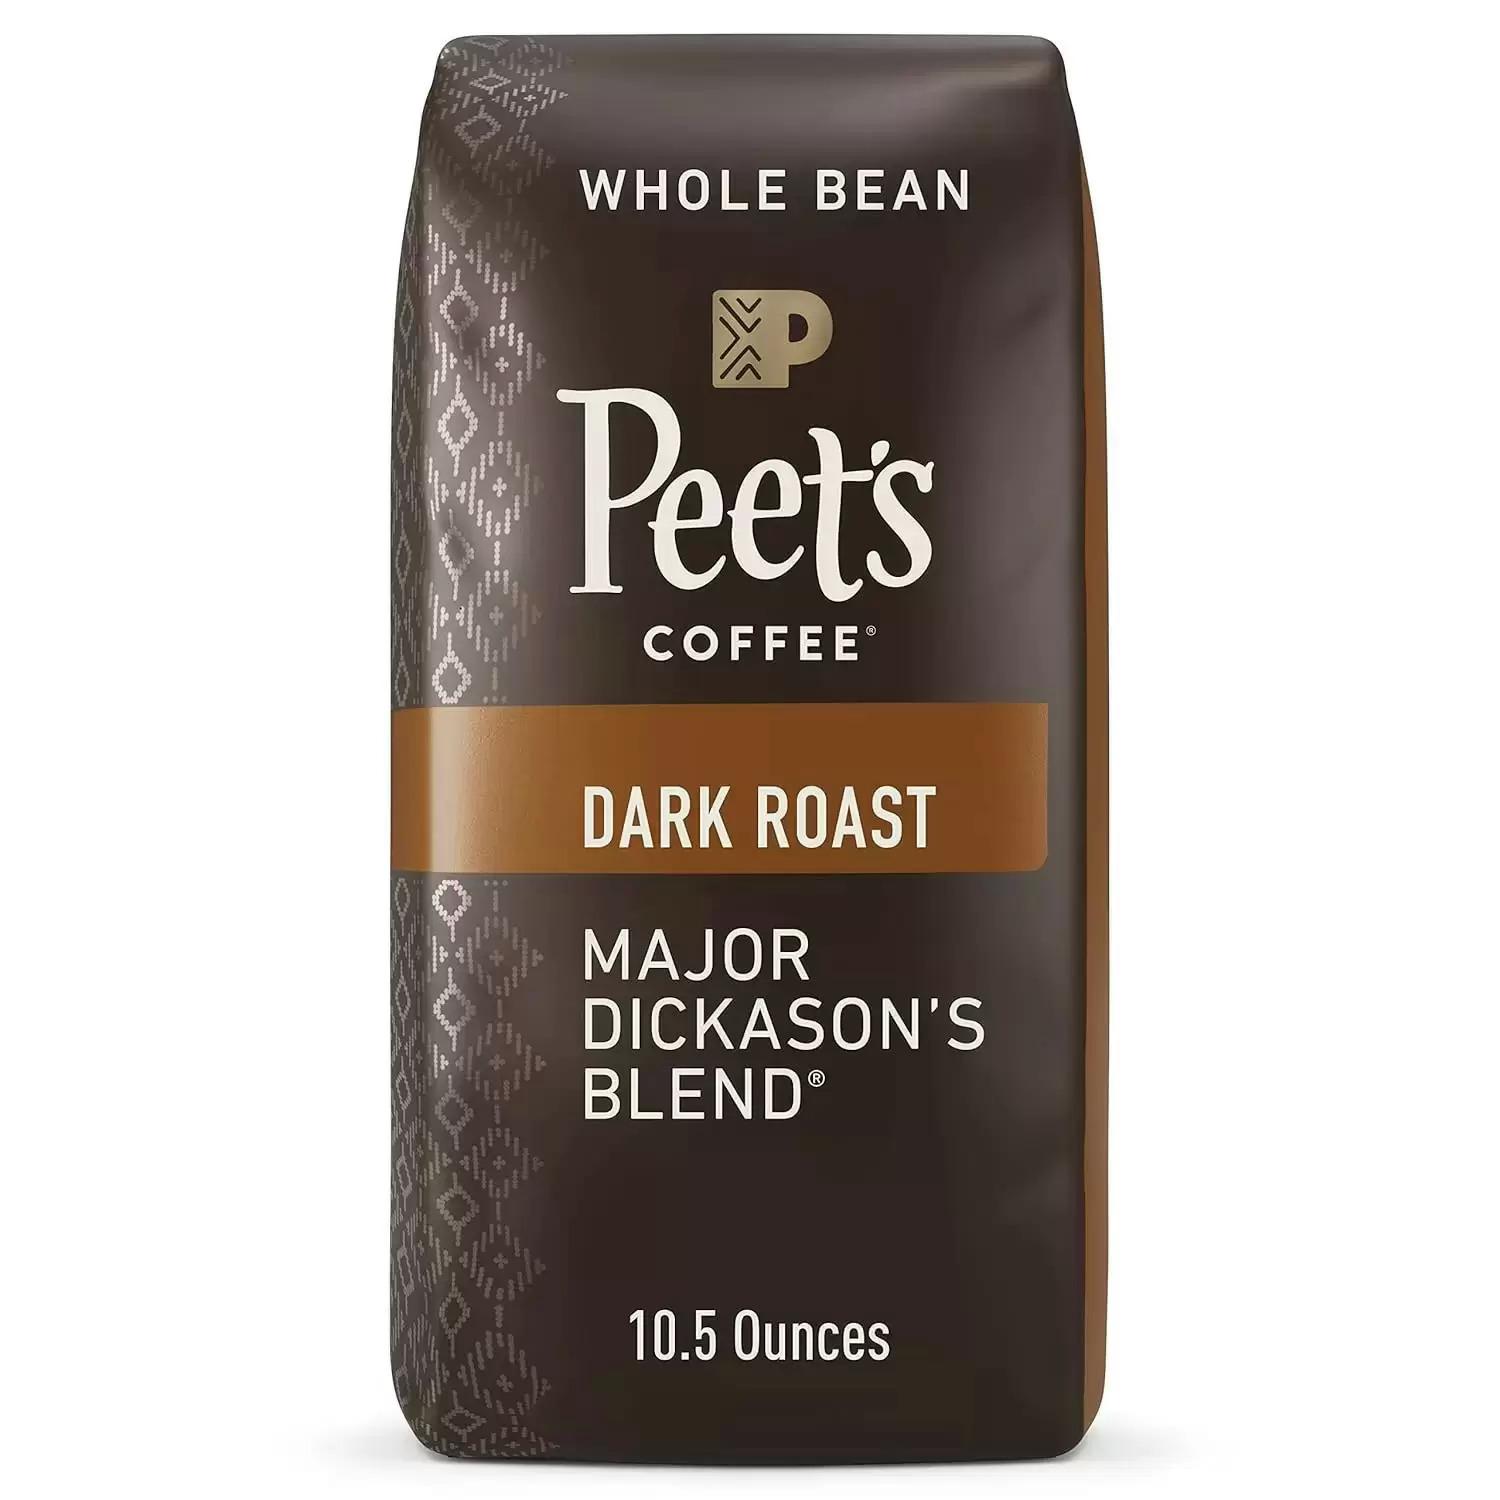 Peets Dark Roast Major Dickasons Blend Whole Bean Coffee for $5.42